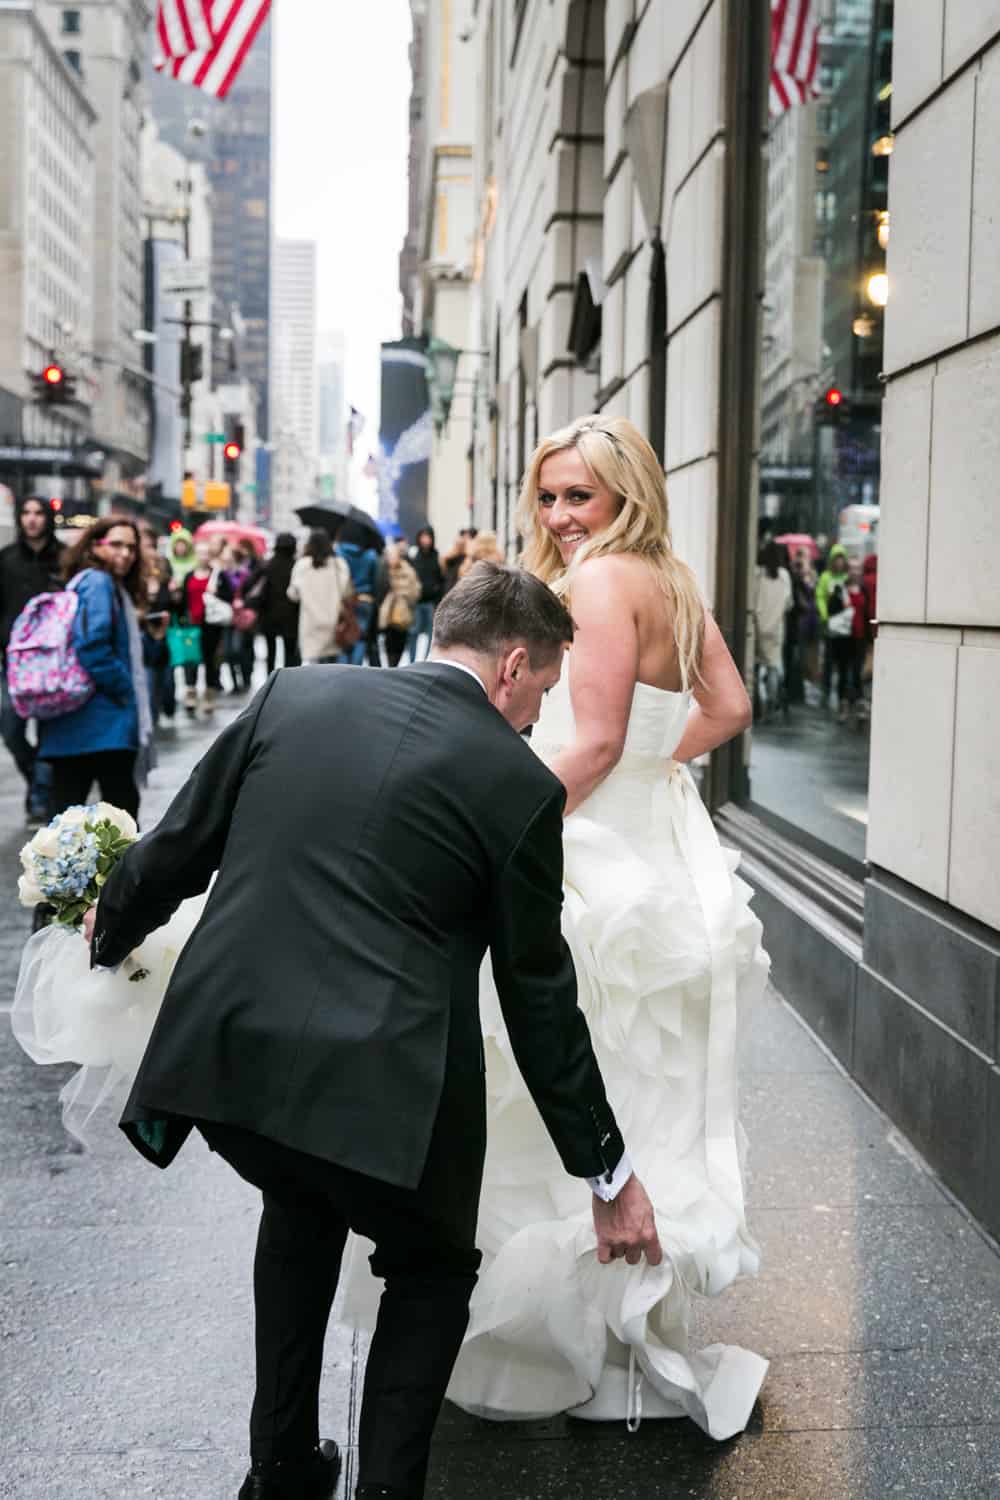 Groom helping bride with dress on NYC sidewalk